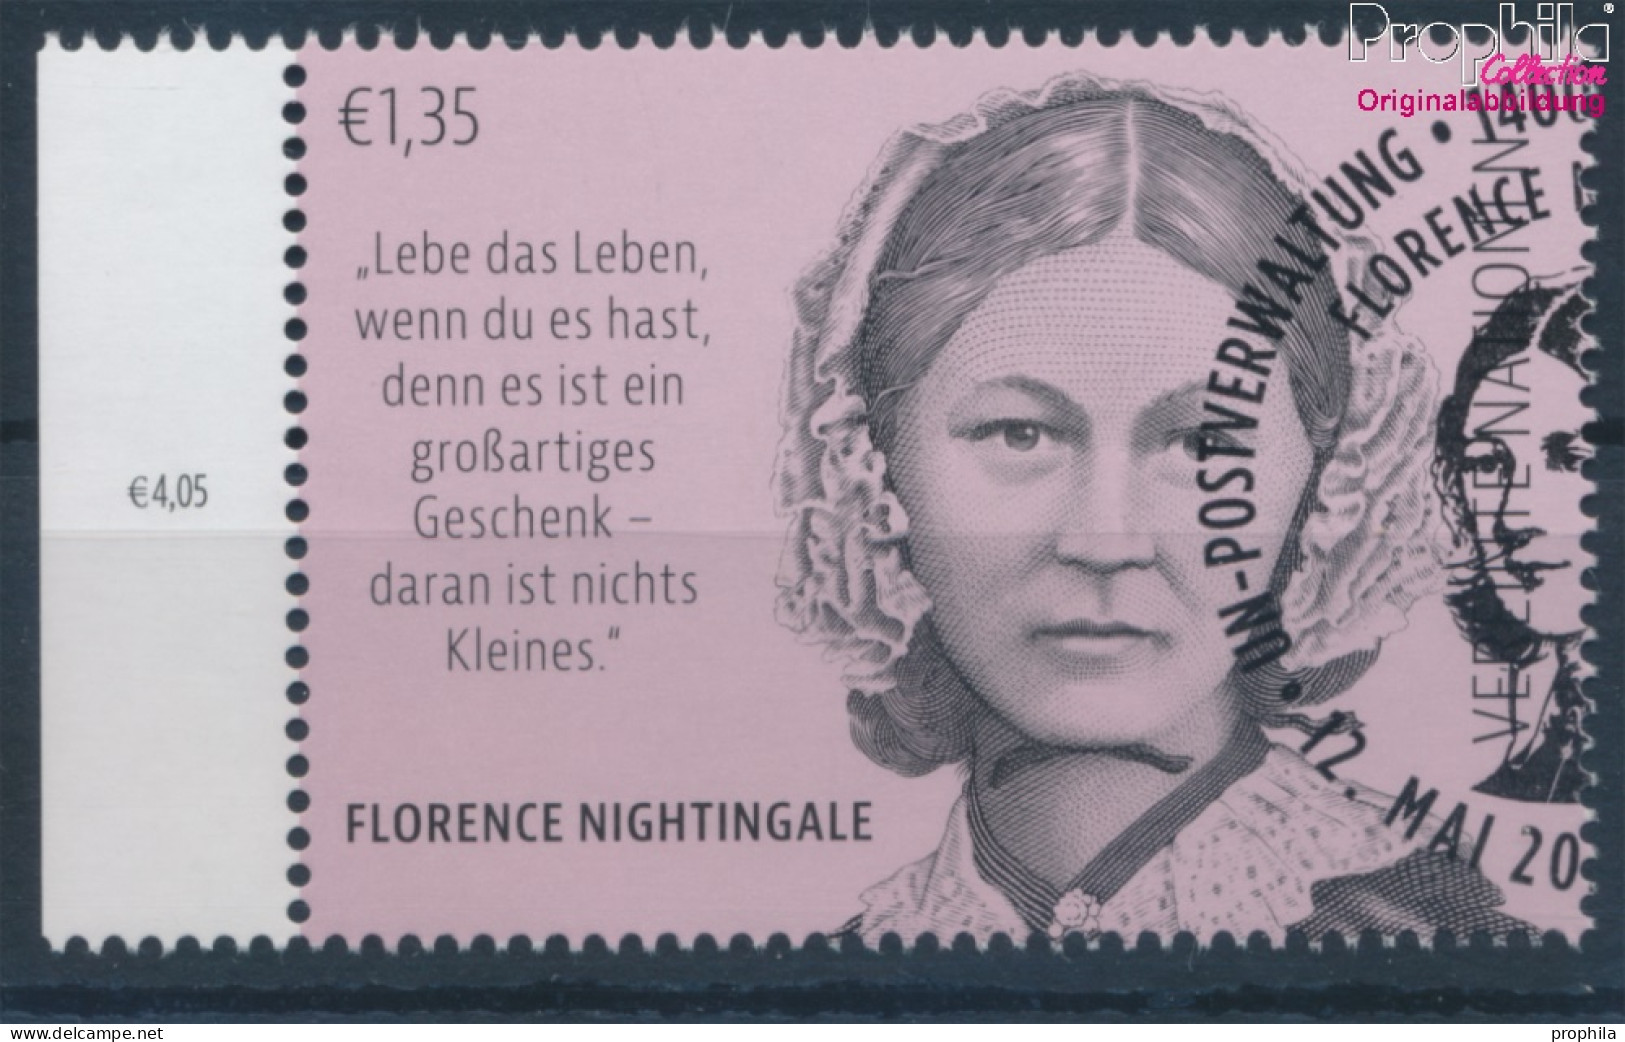 UNO - Wien 1086 (kompl.Ausg.) Gestempelt 2020 Florence Nightingale (10357186 - Usados